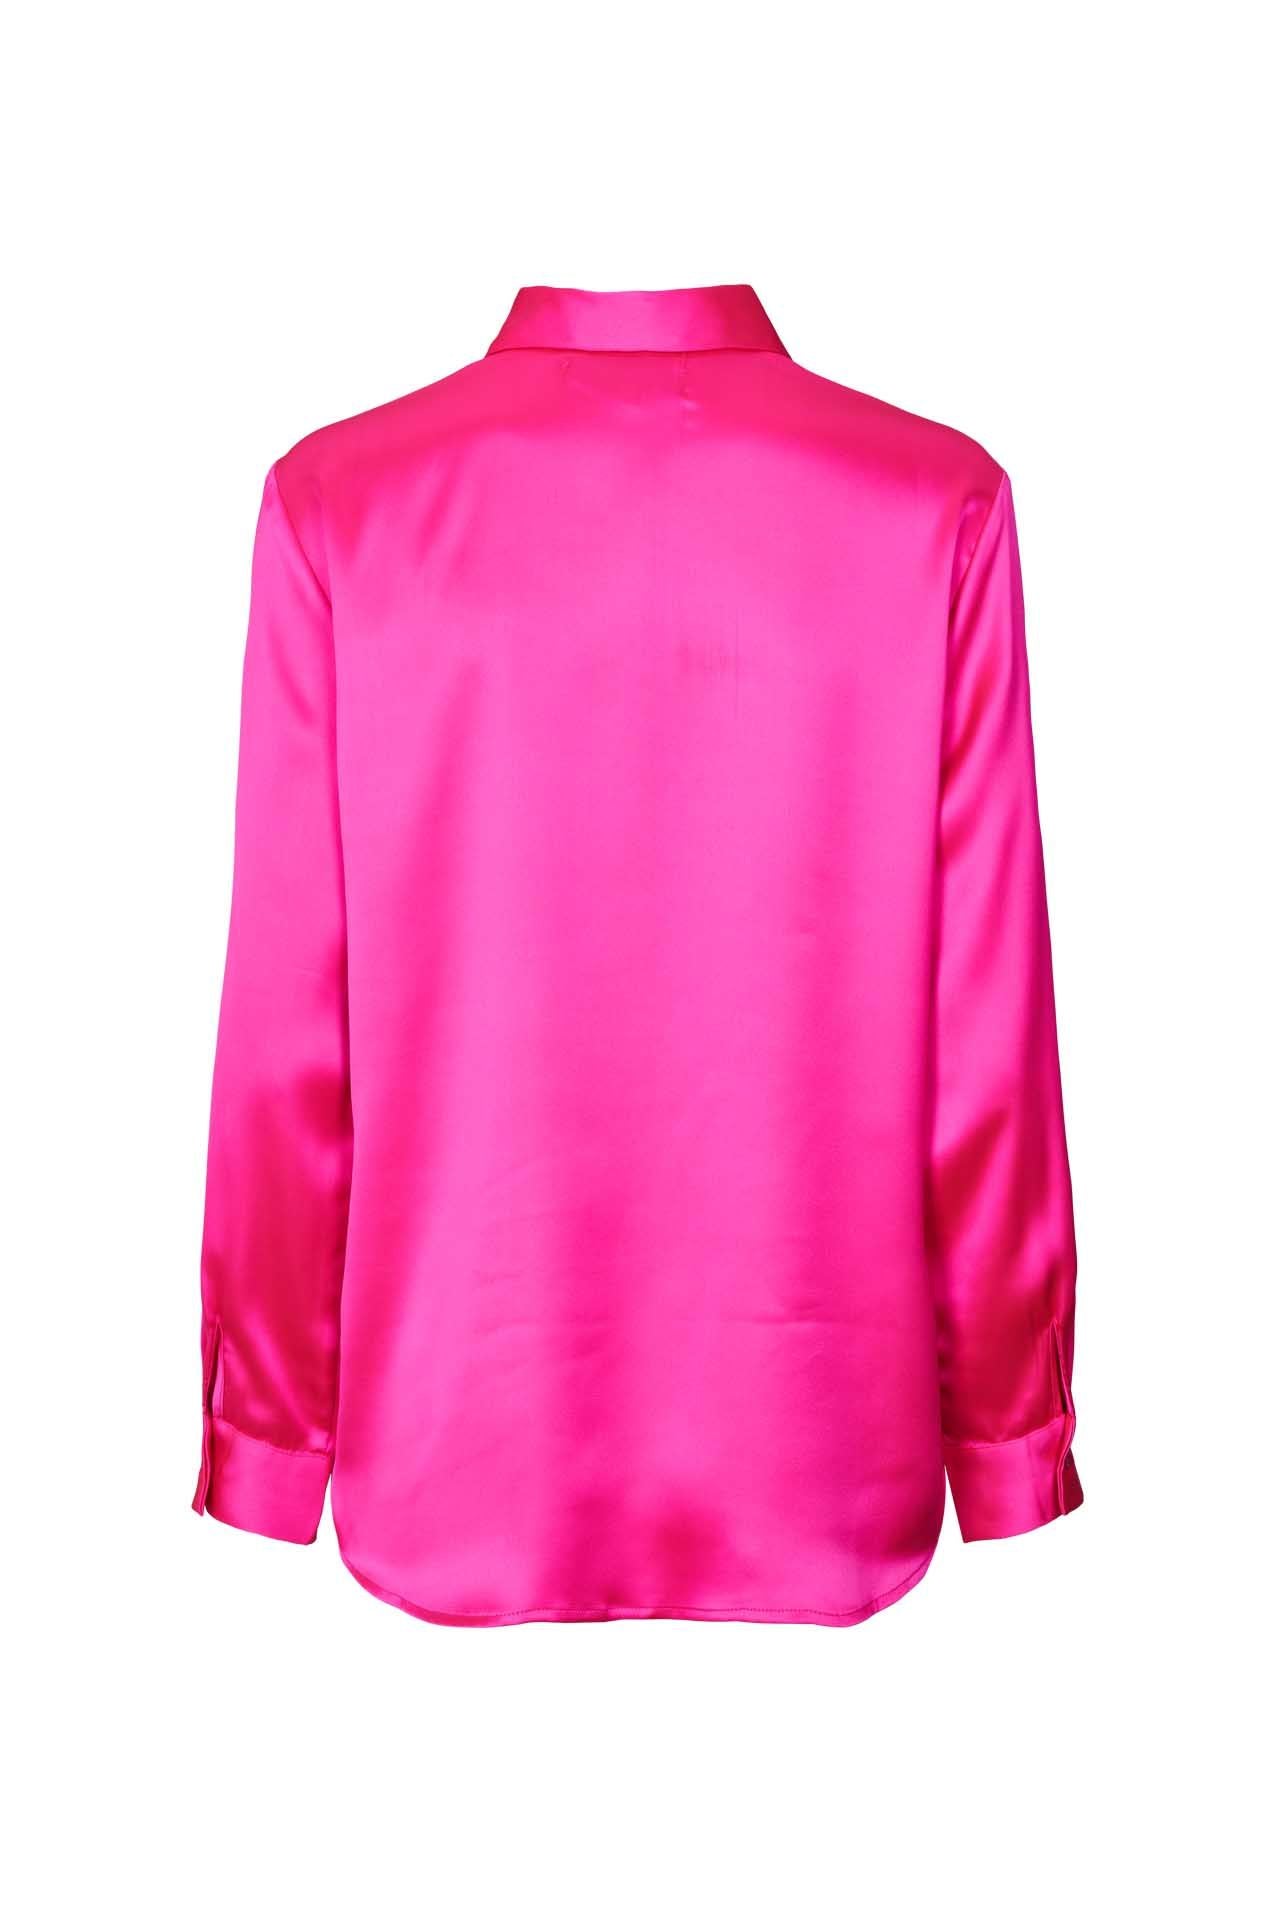 Lollys Laundry - Kayla Shirt Pink